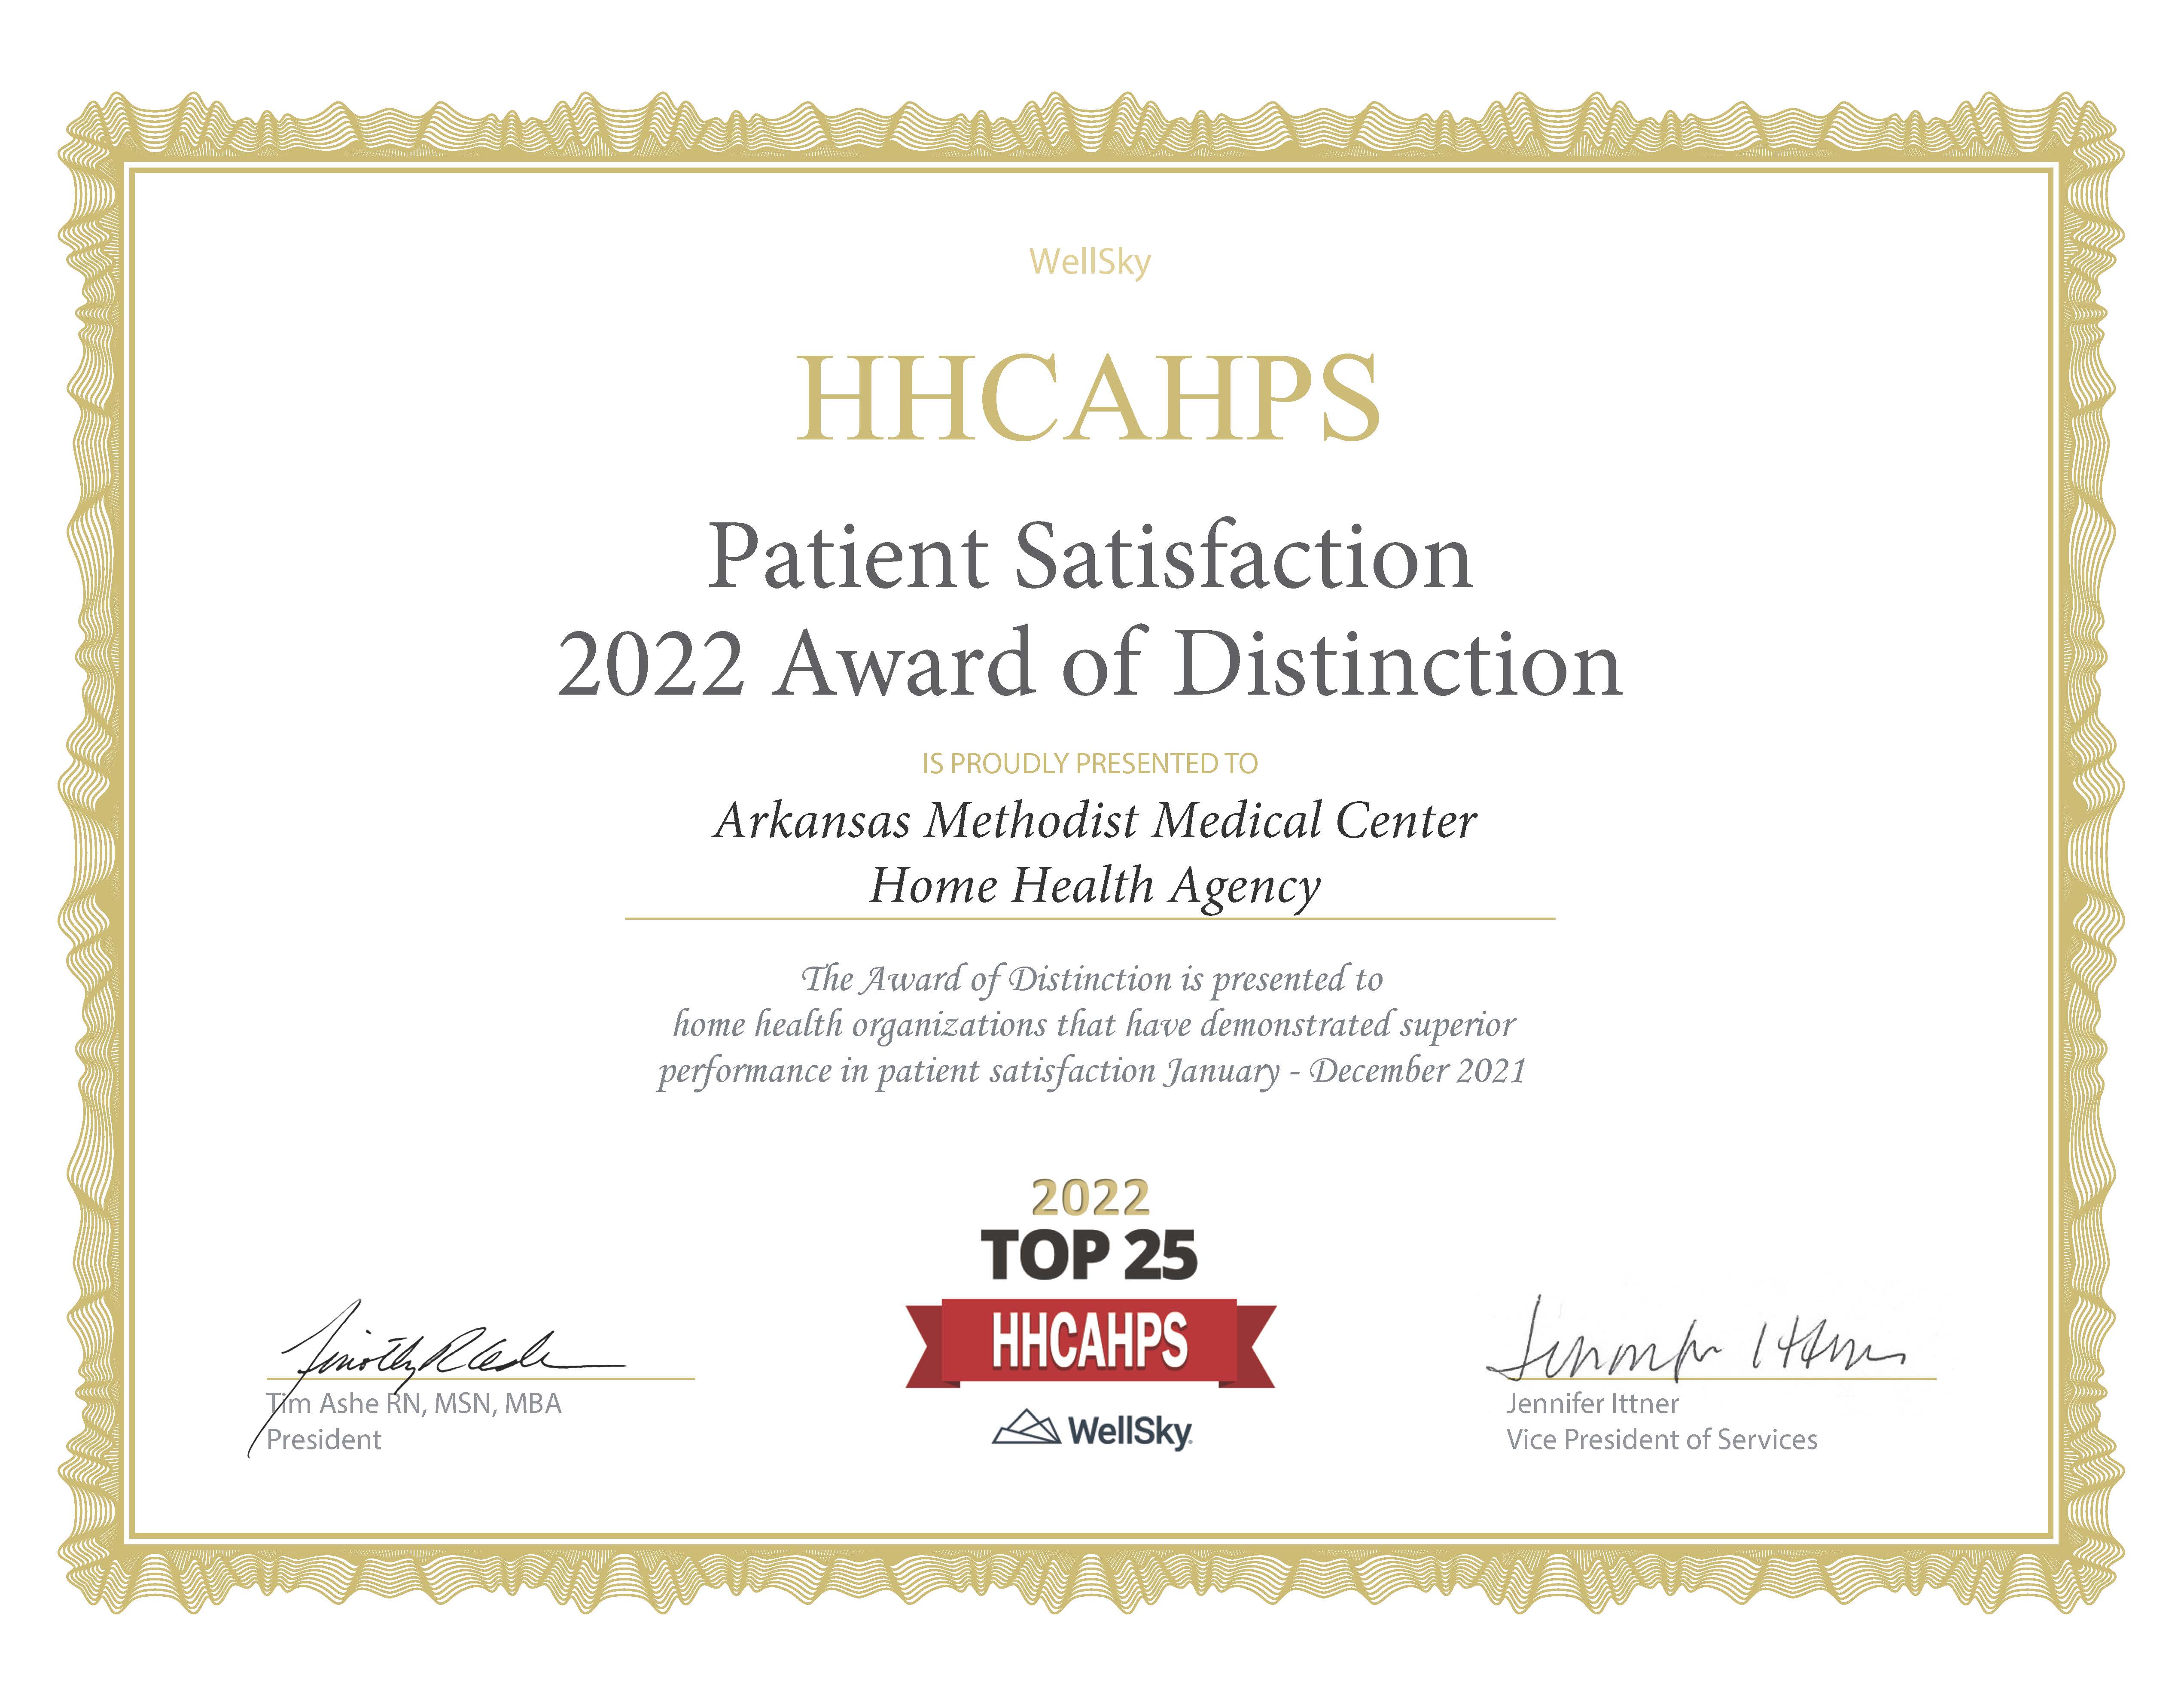 Hhcahps top 25 award 2022 arkansas methodist medical center home health agency ccn 047004